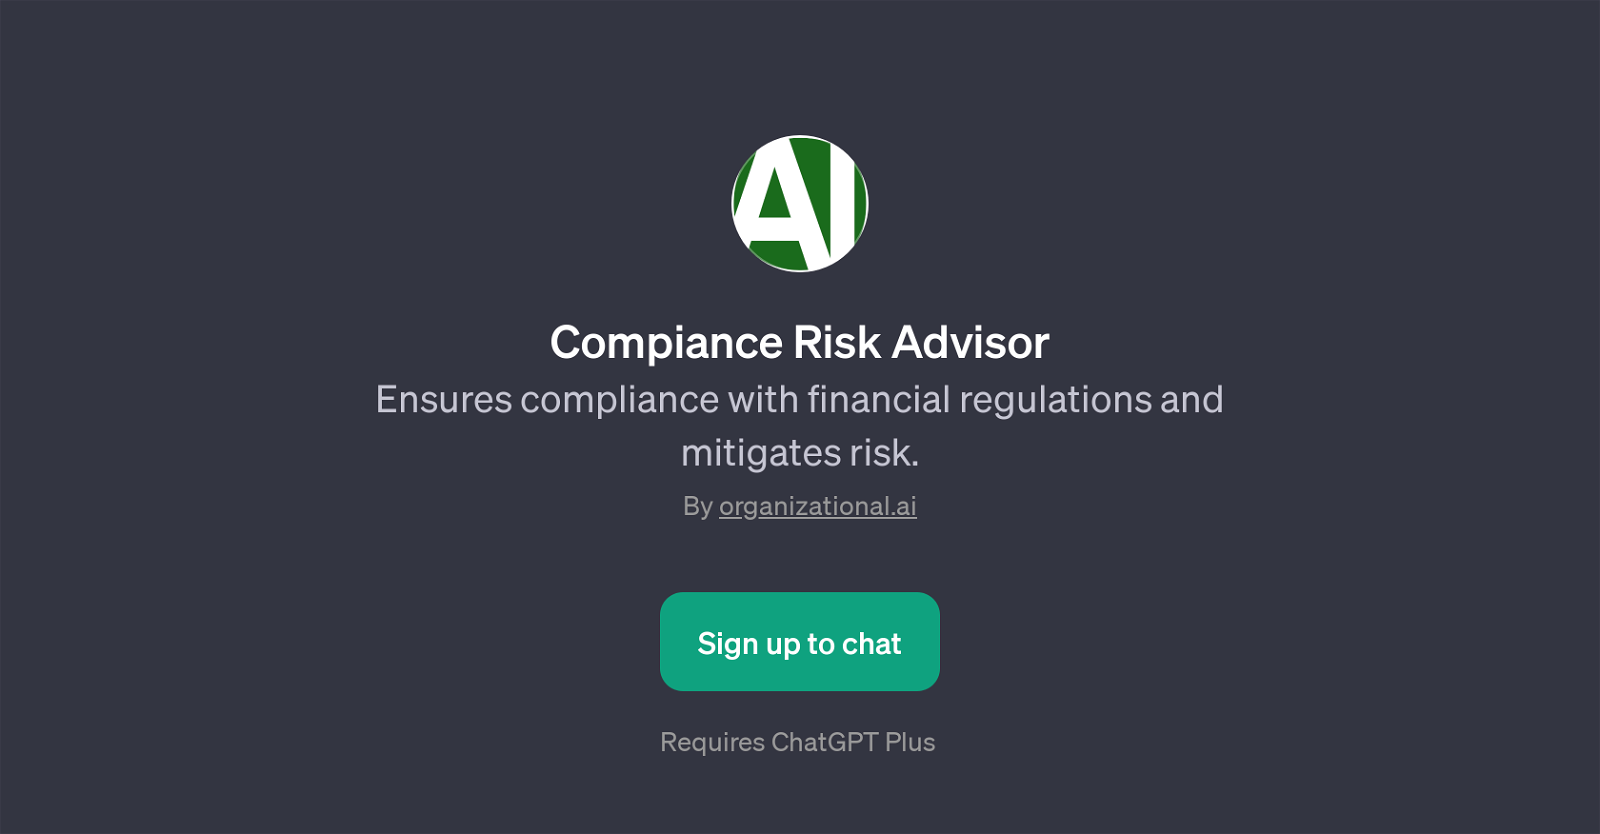 Compiance Risk Advisor website